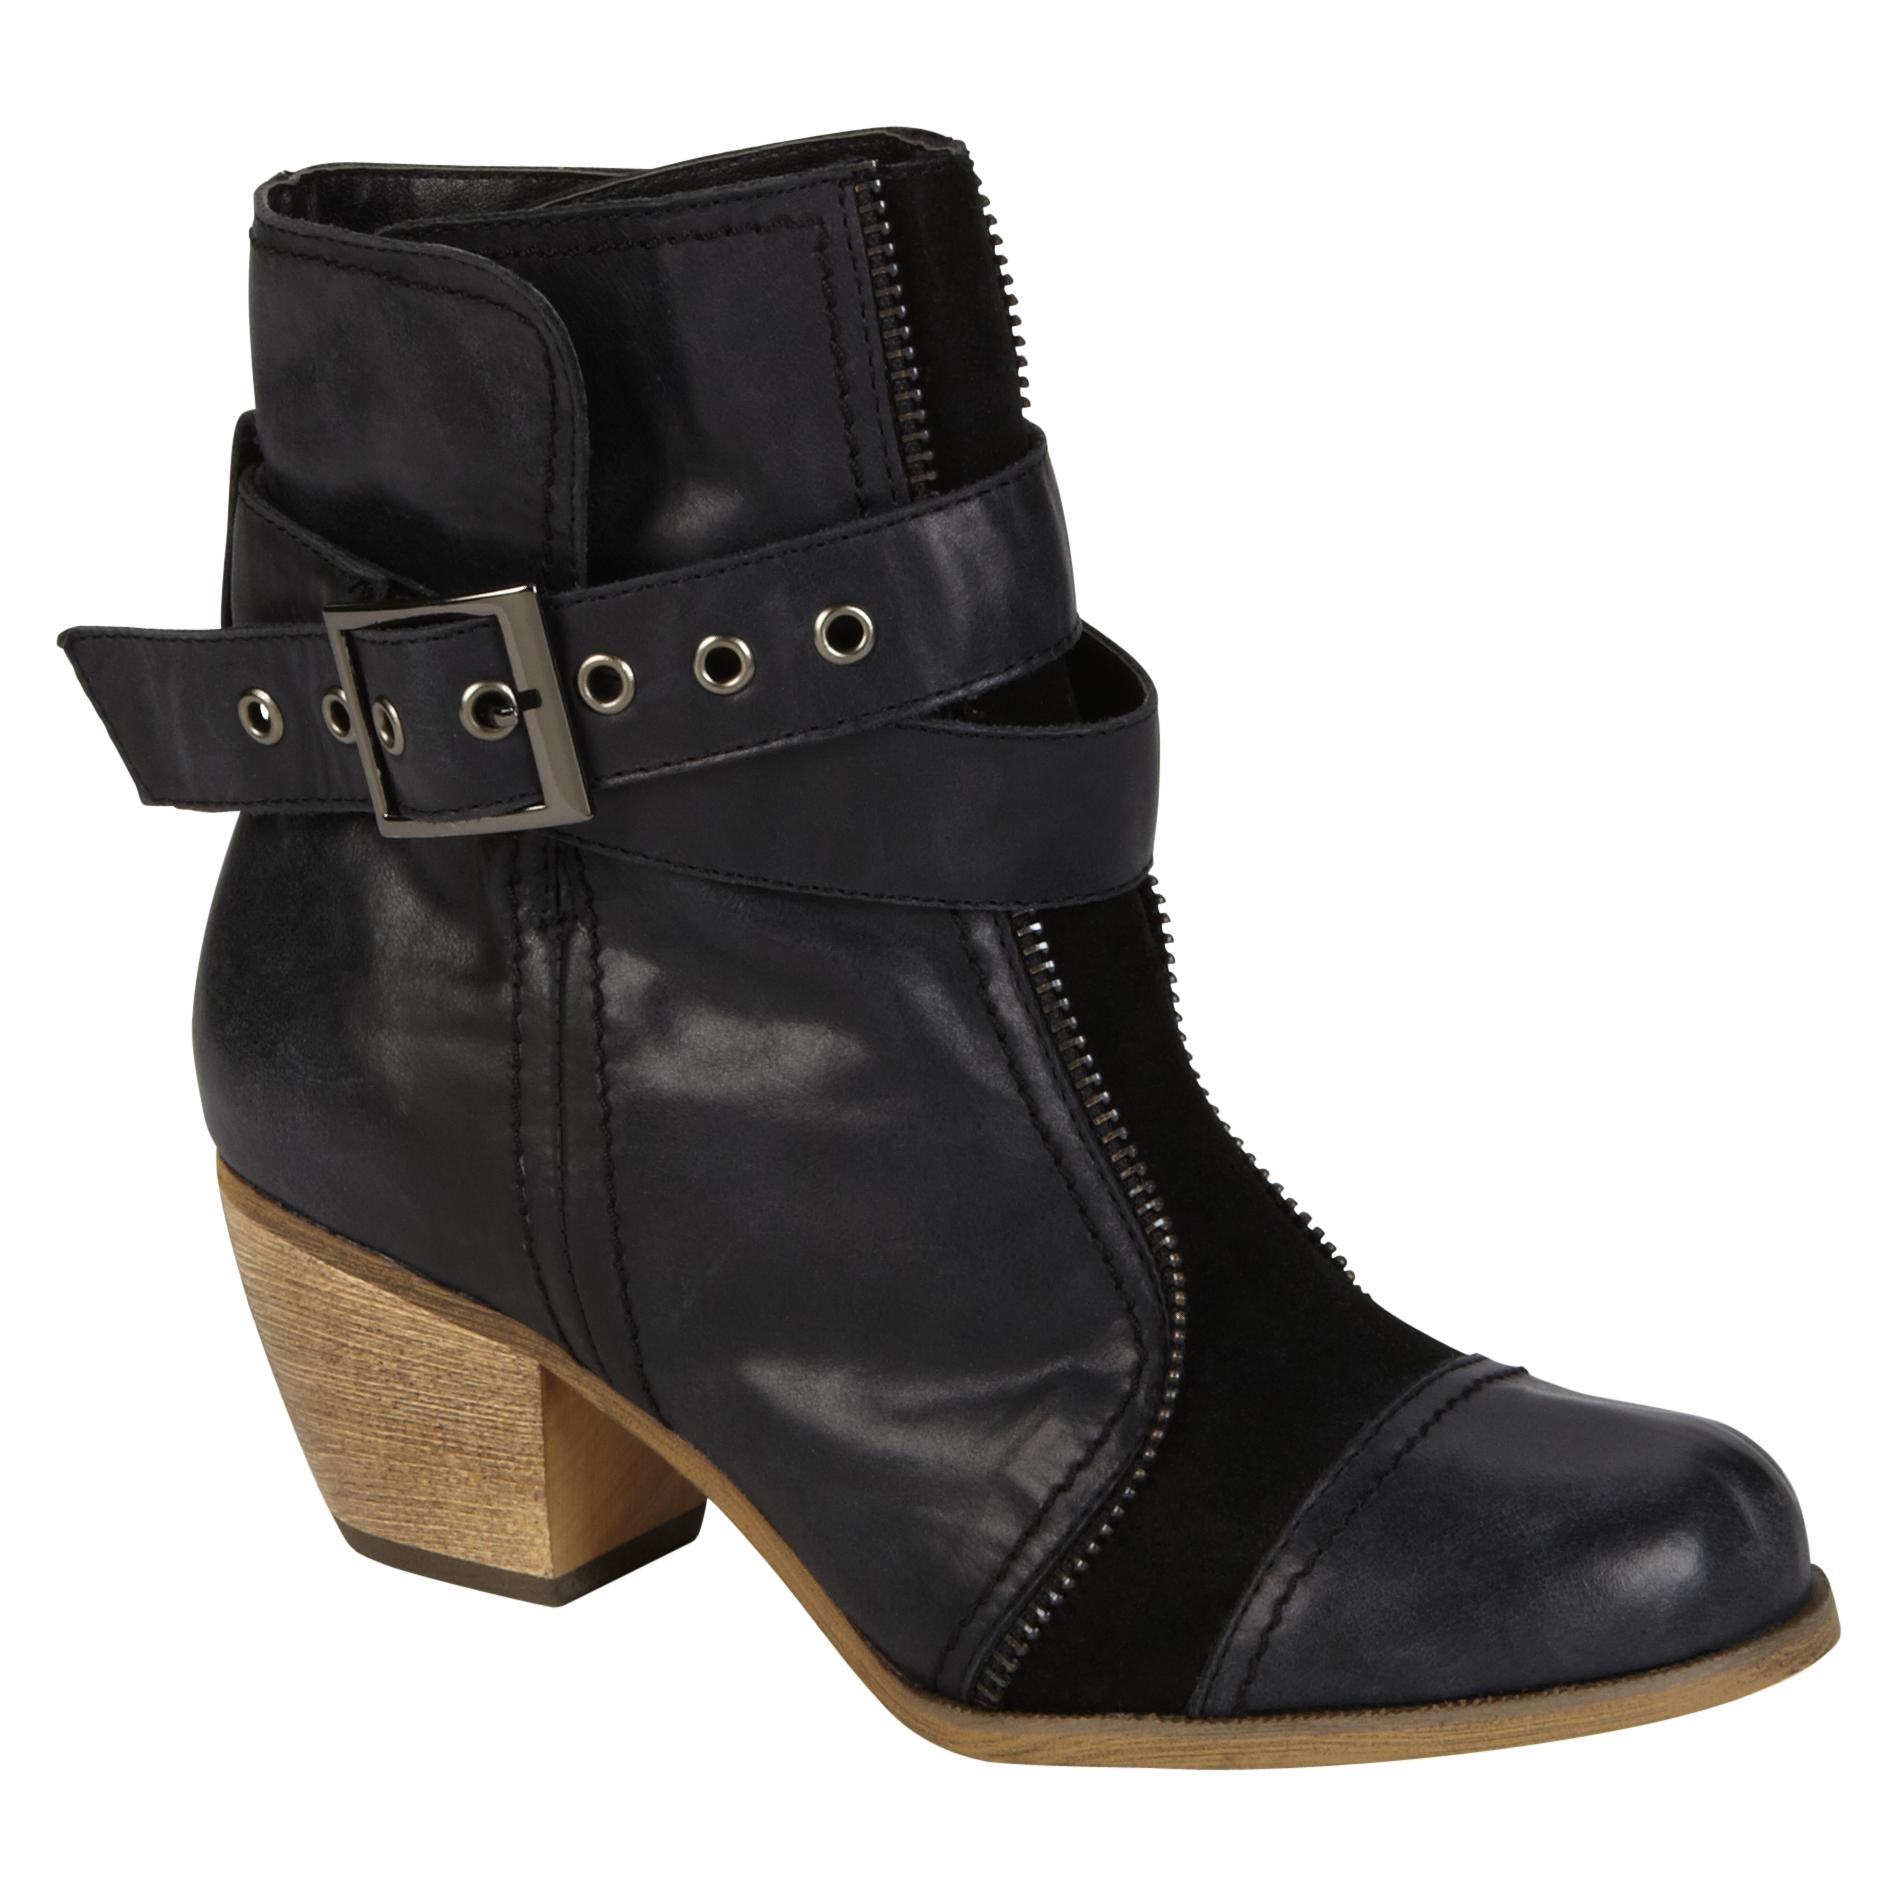 Intrigue Women's Darcy Fashion Boot - Black